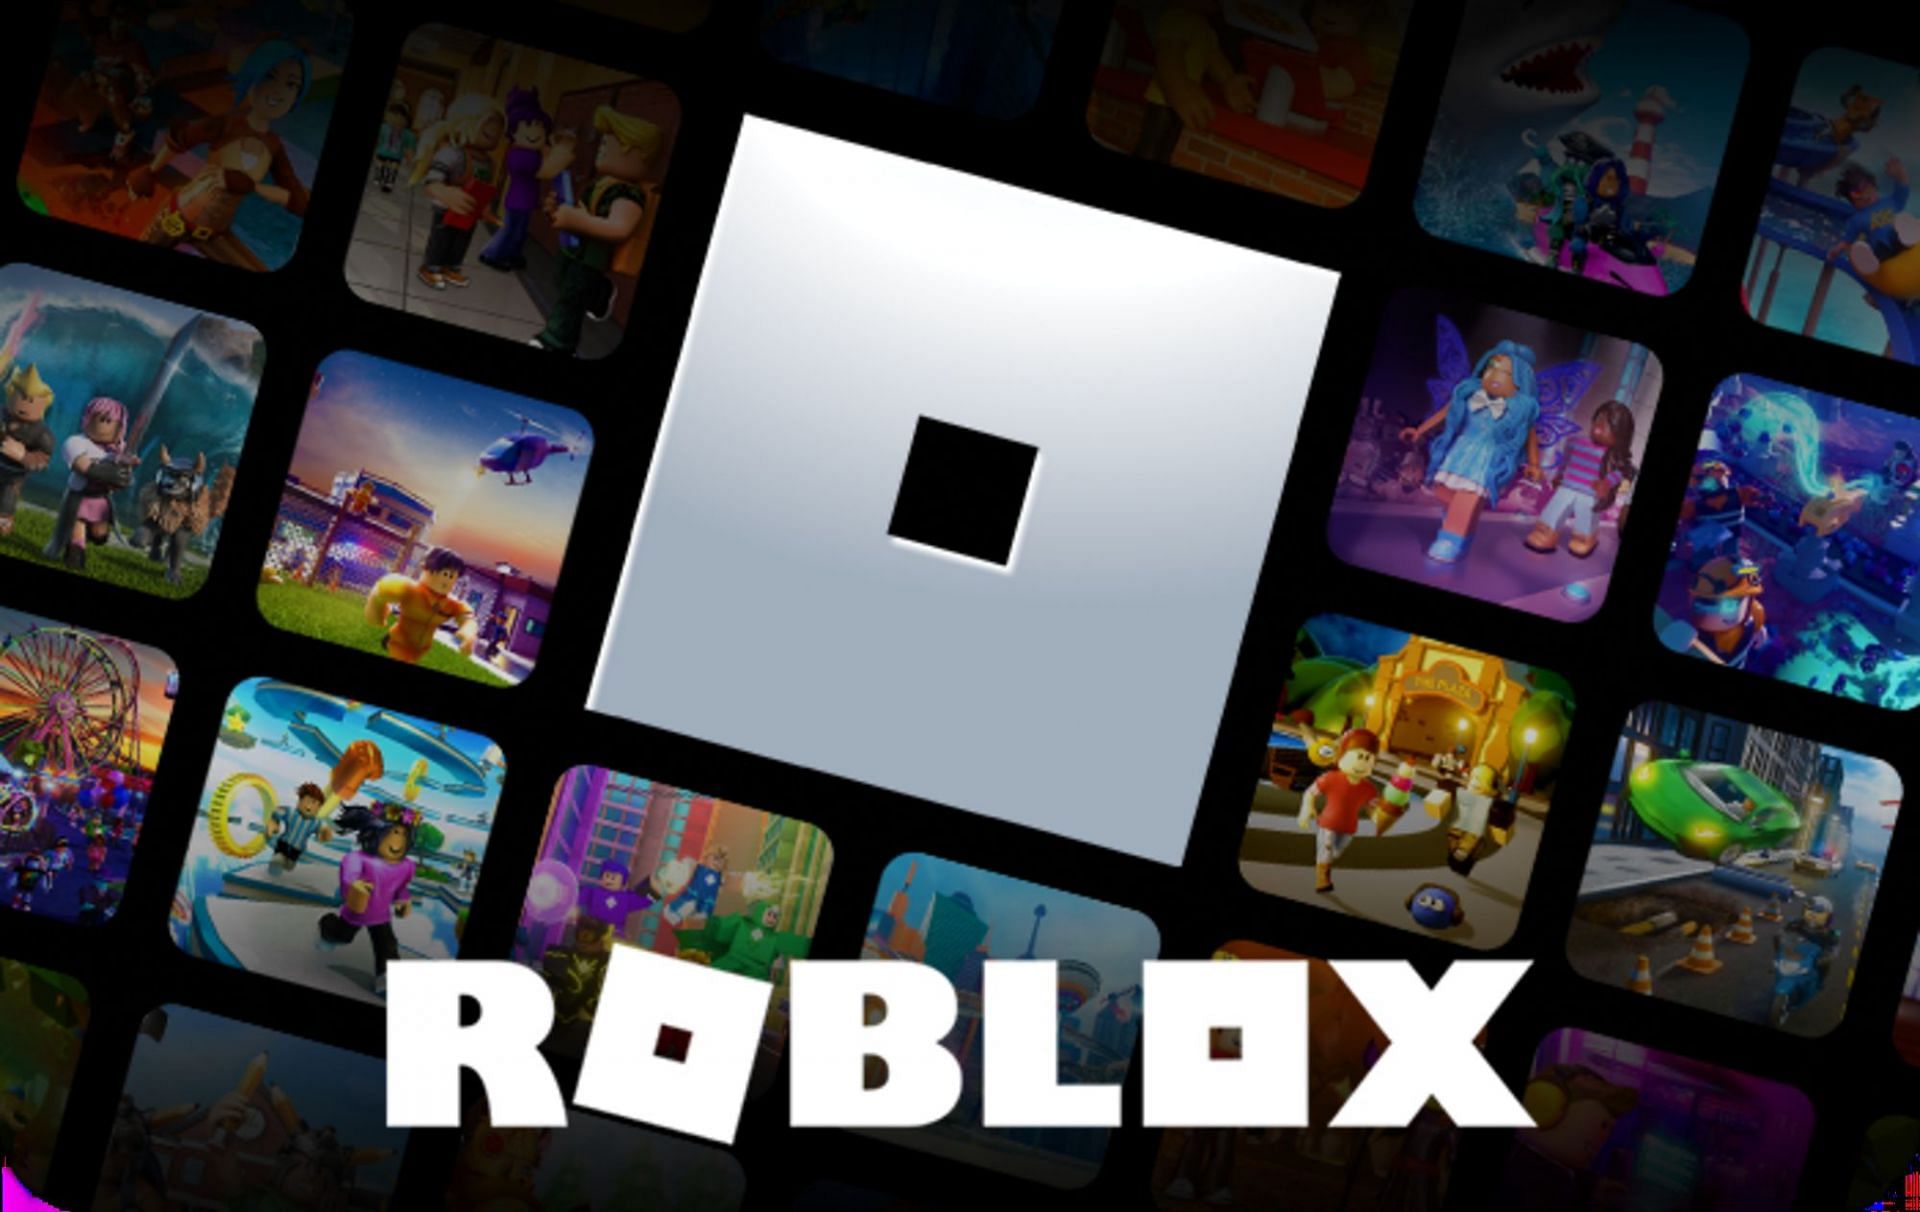 Top 3 Upcoming Roblox Animal Games